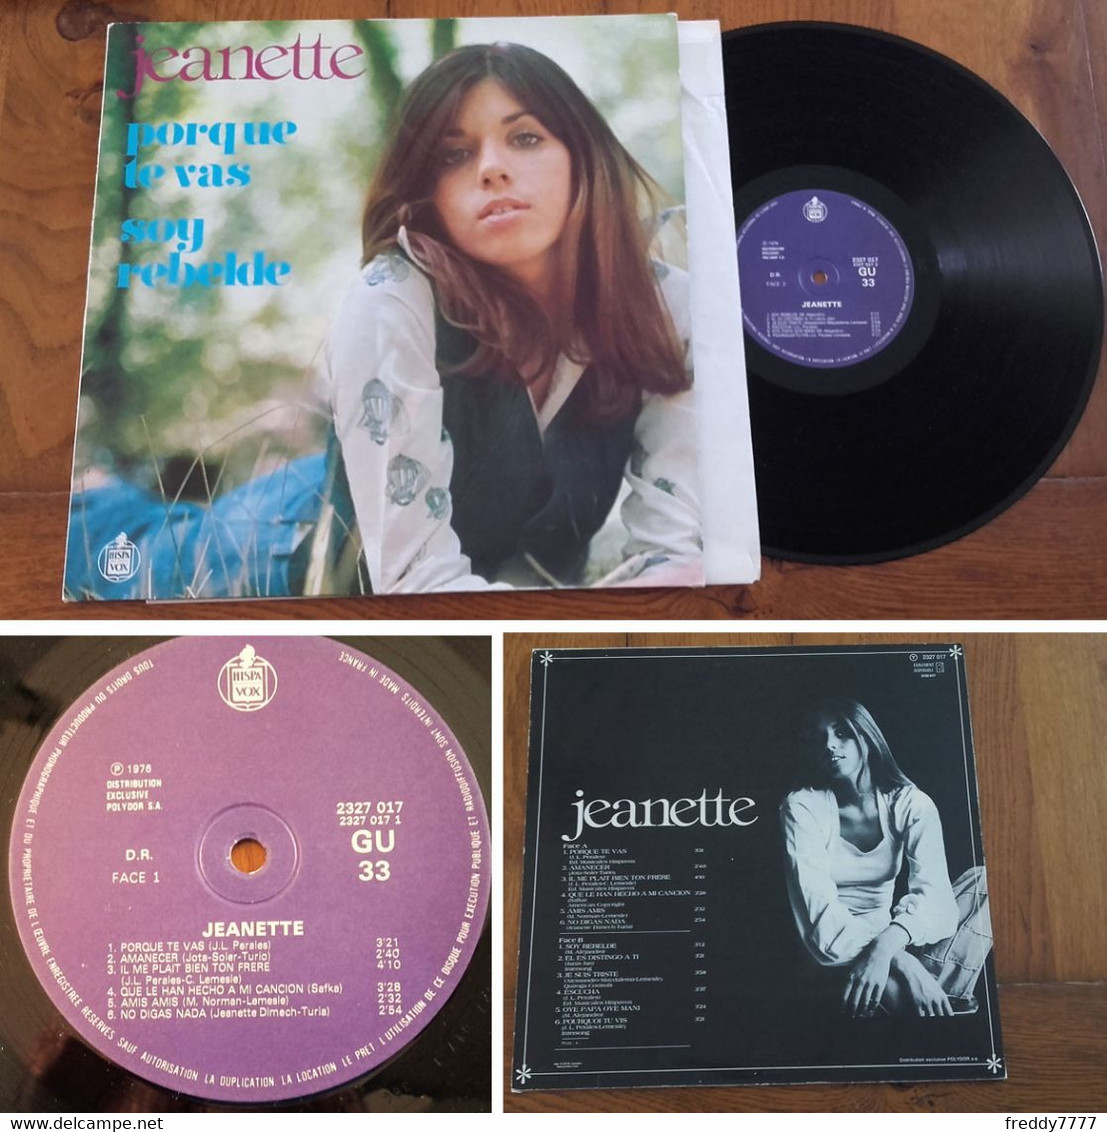 RARE French LP 33t RPM (12") JEANETTE (1976) - Collectors